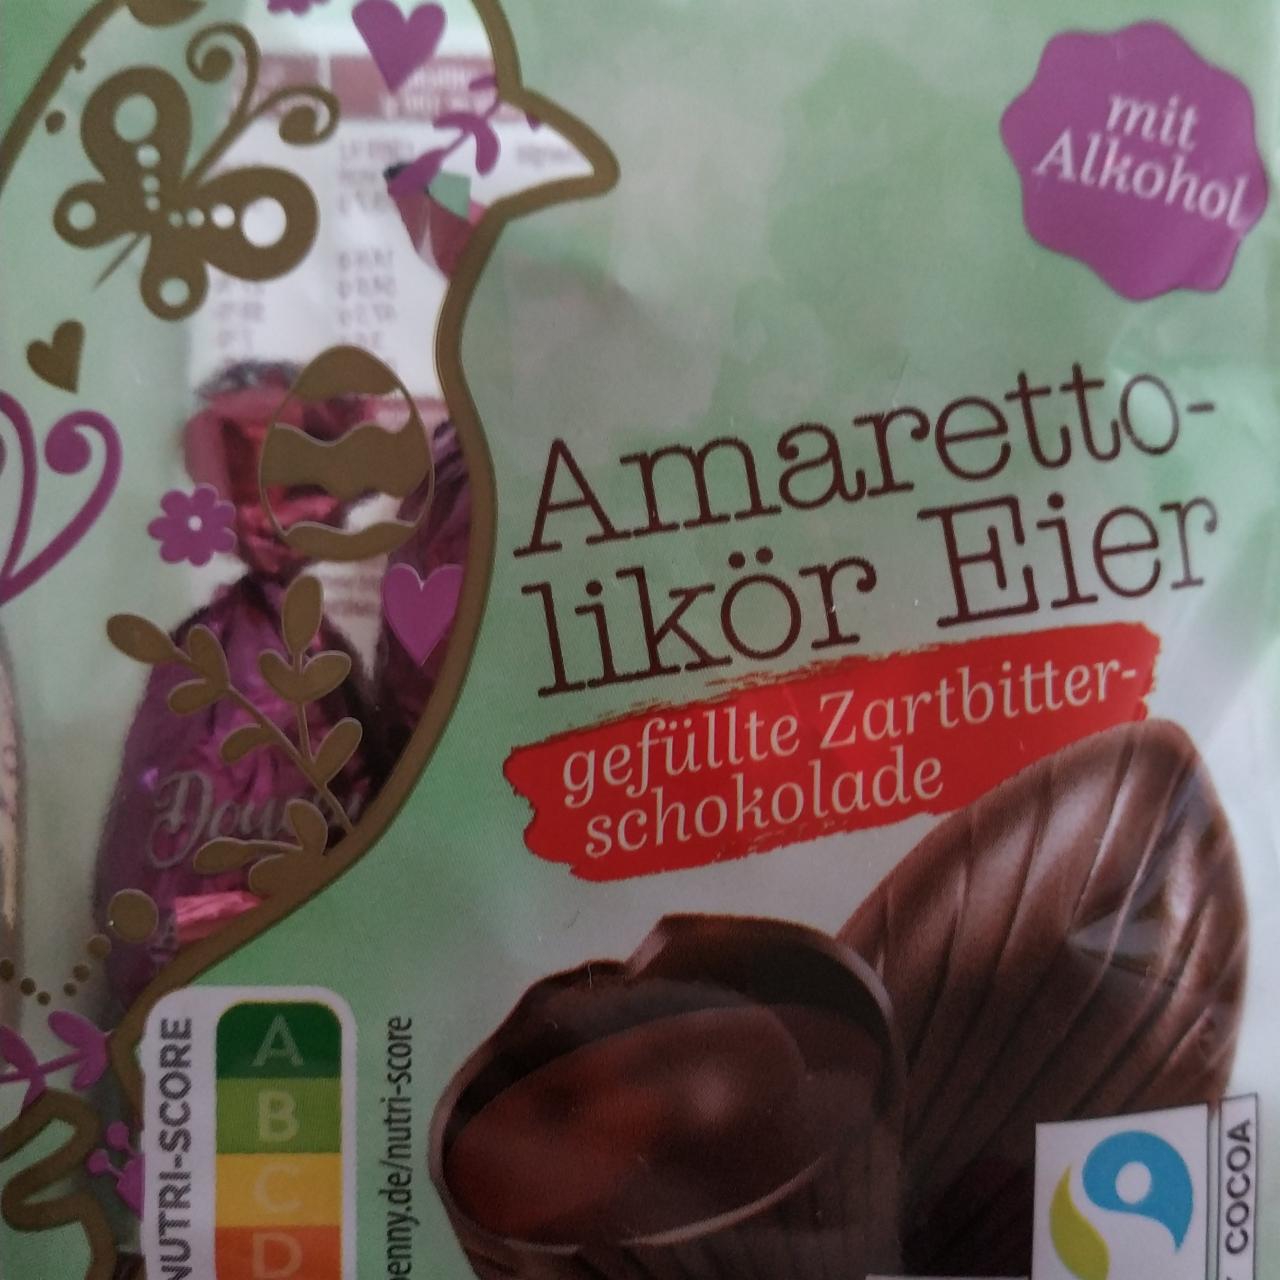 Фото - Шоколадні цукерки з лікером Amaretto likor Eier Douceur